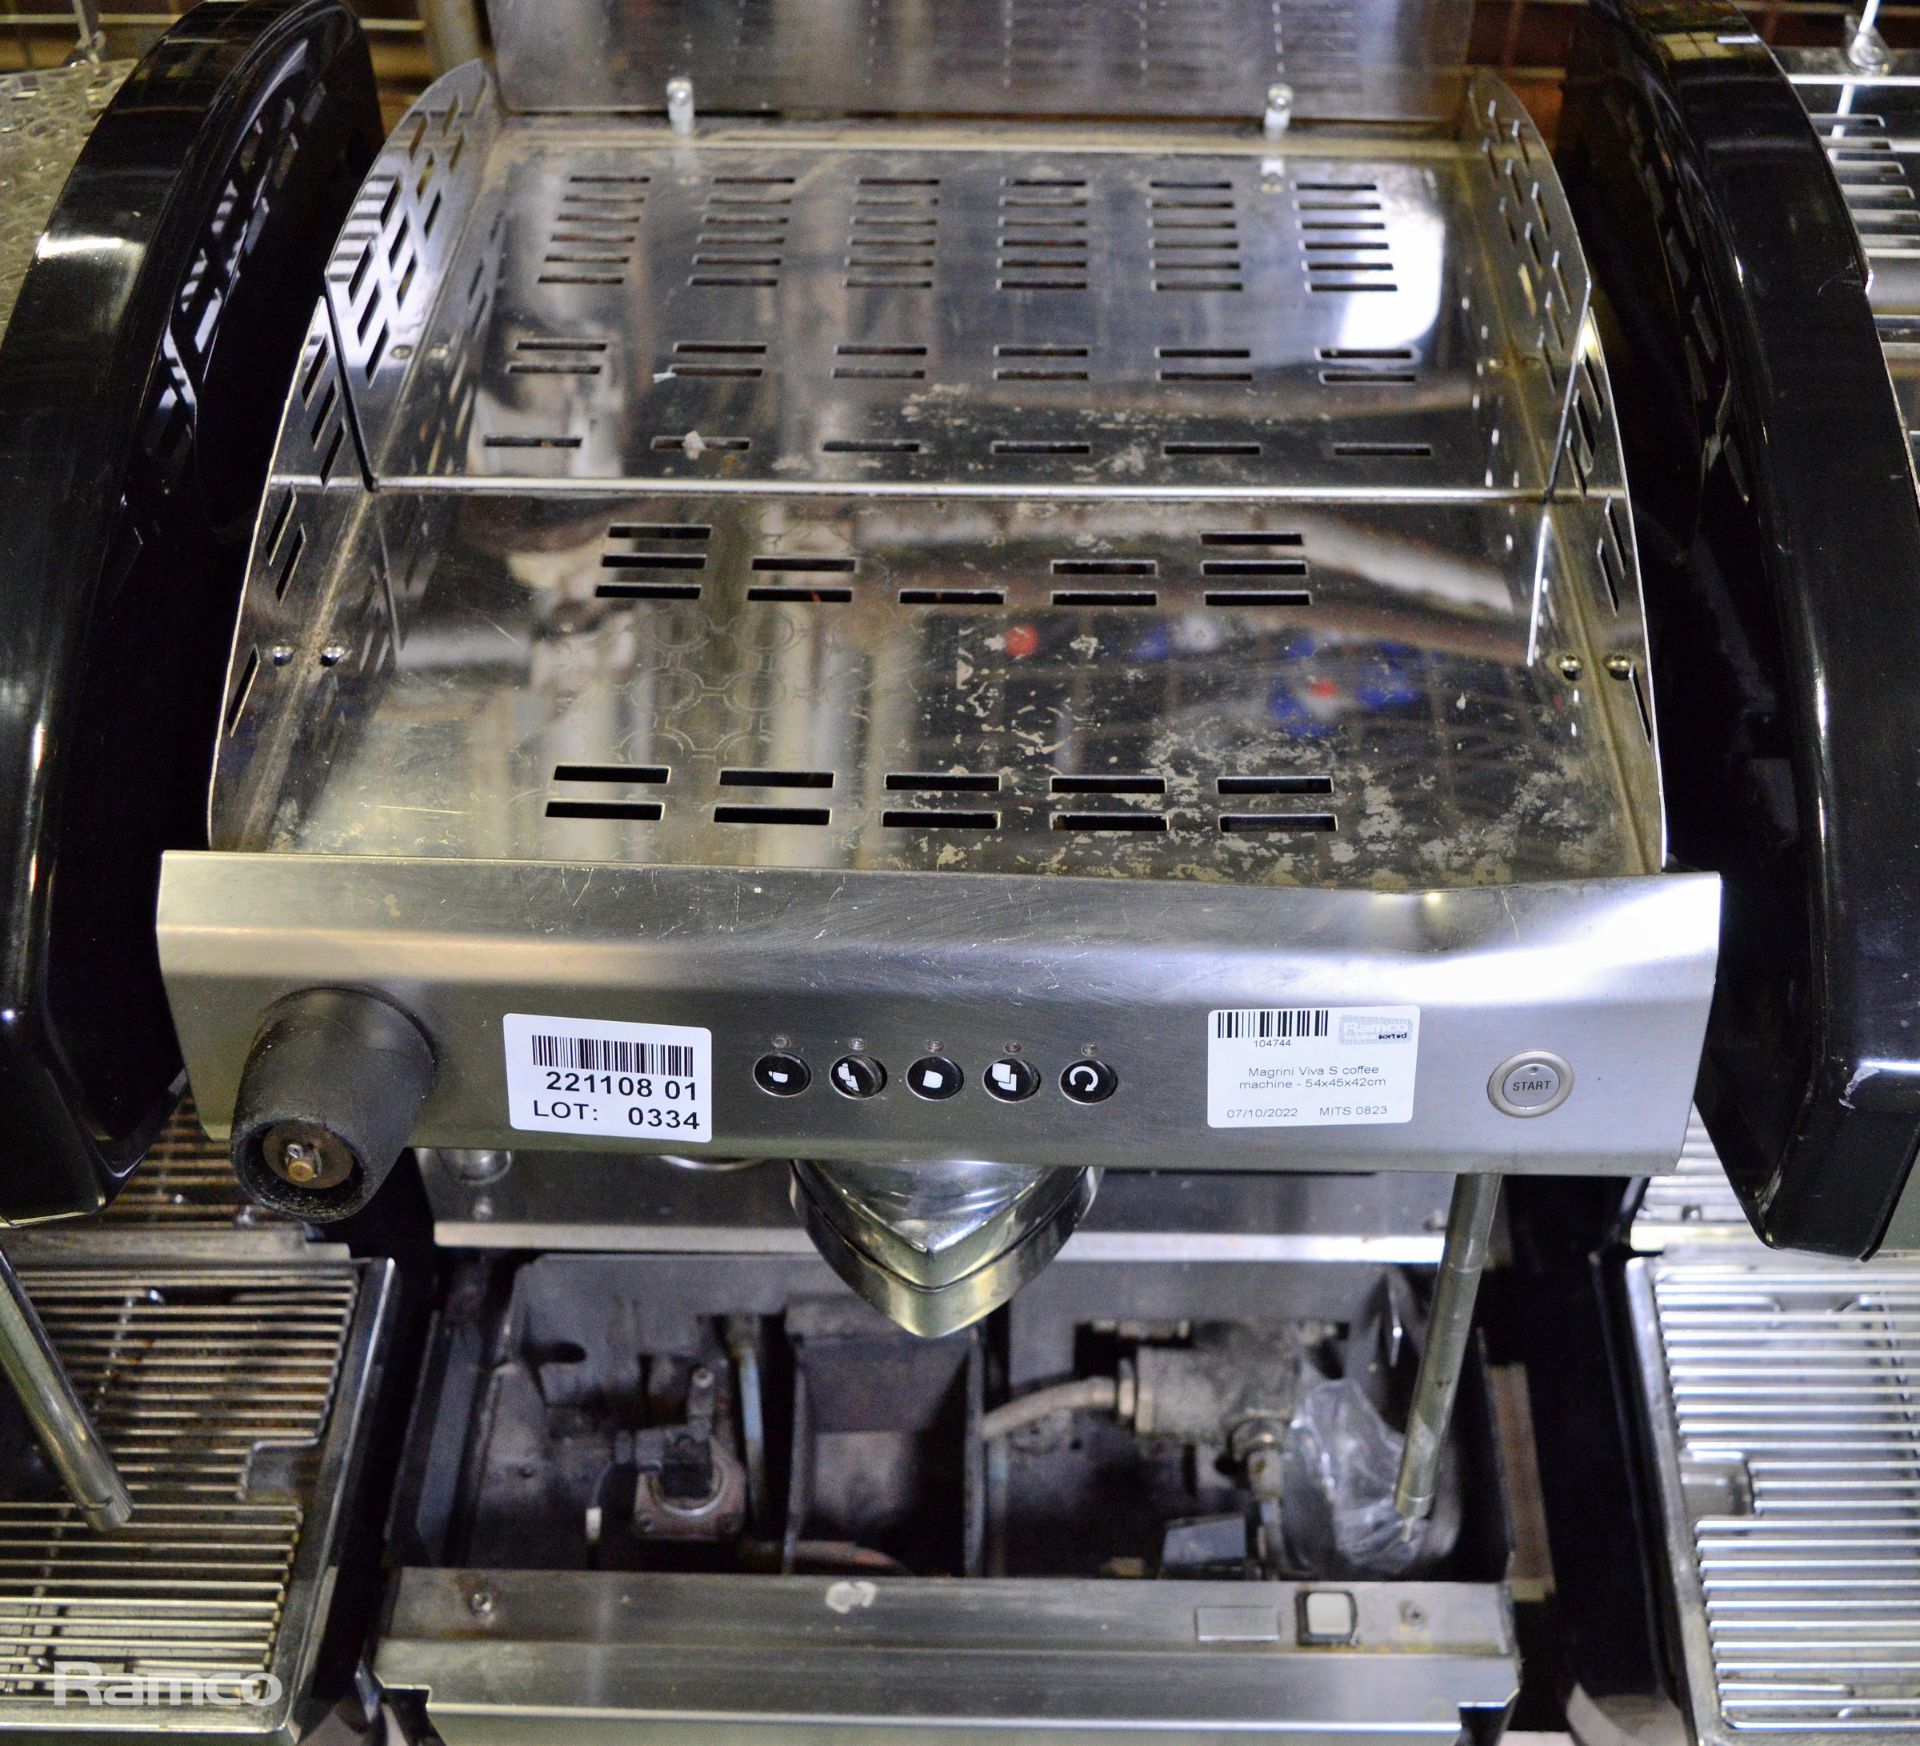 Magrini Viva S coffee machine - 54x45x42cm - Image 3 of 4